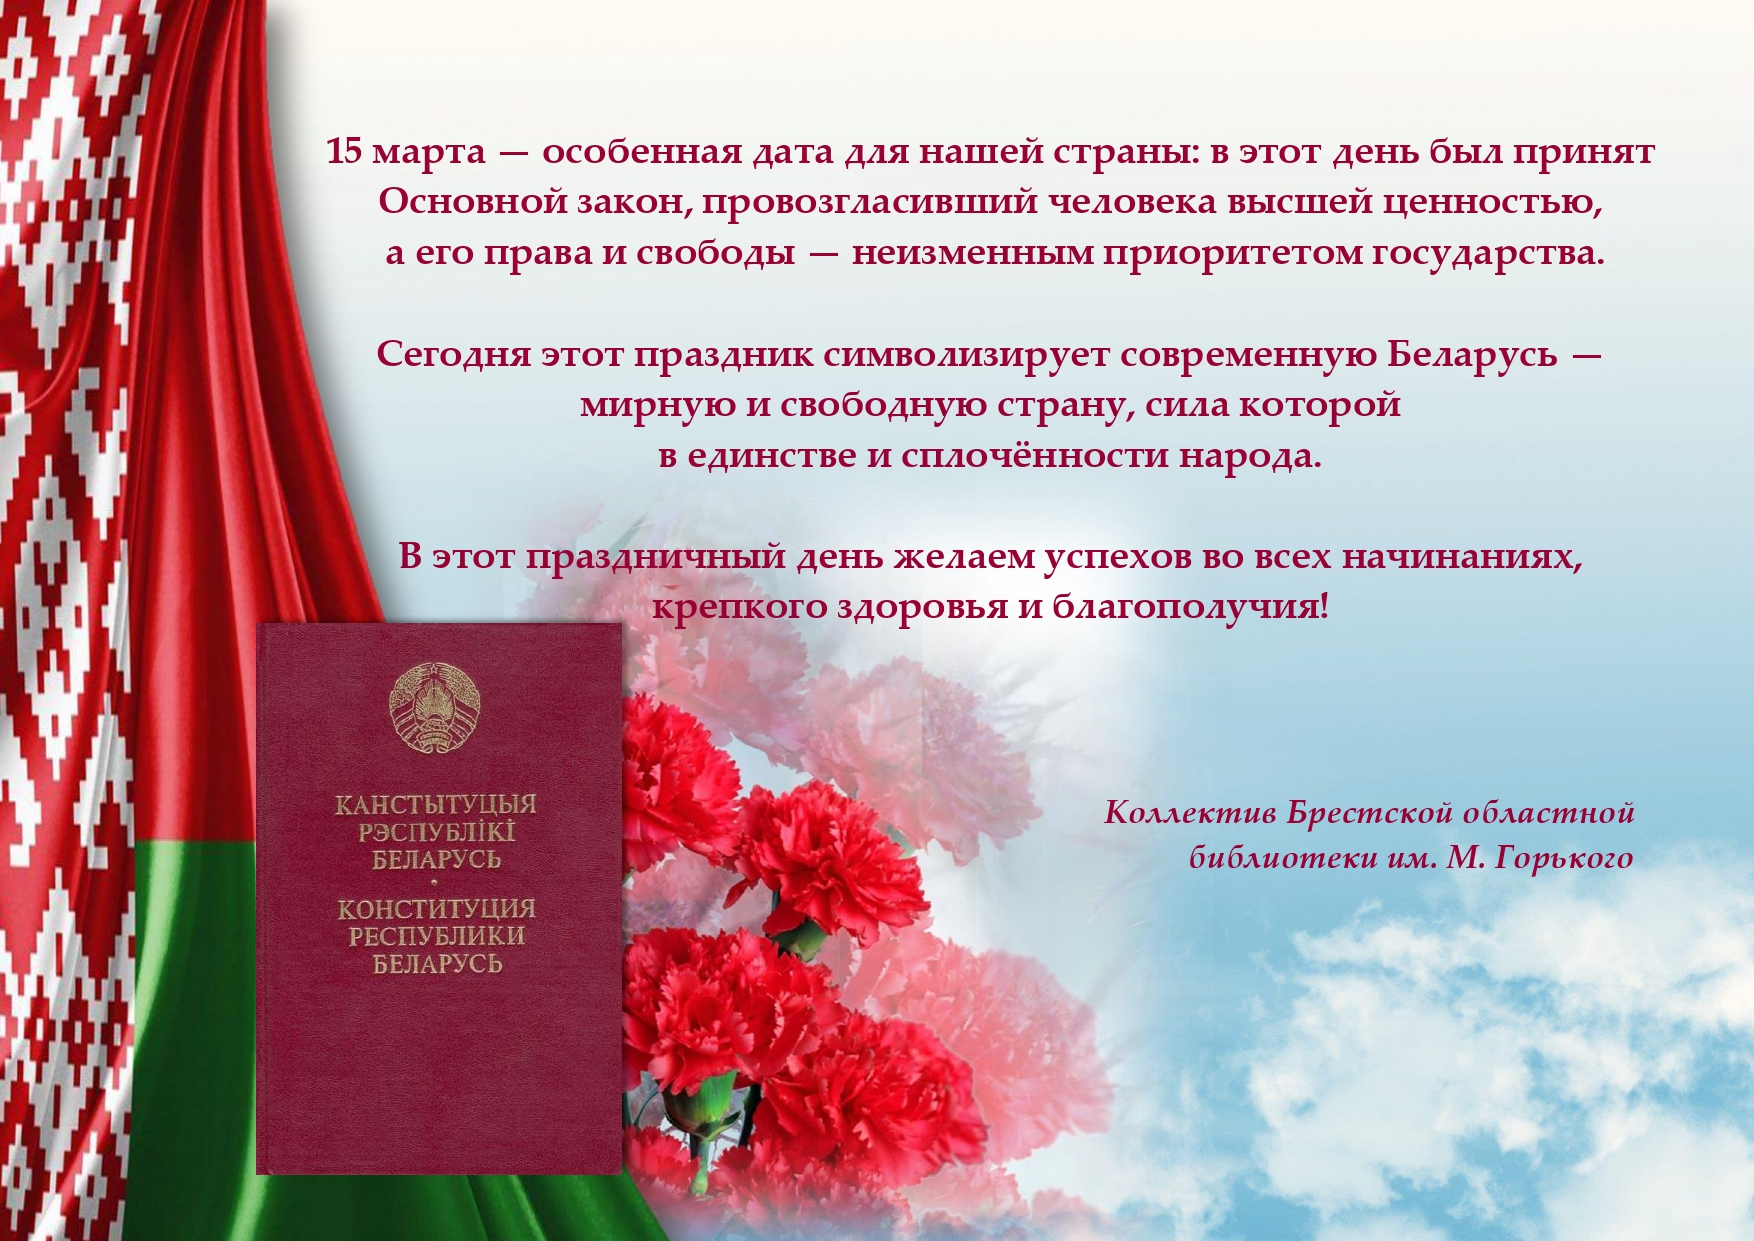 С Днём Конституции Республики Беларусь!